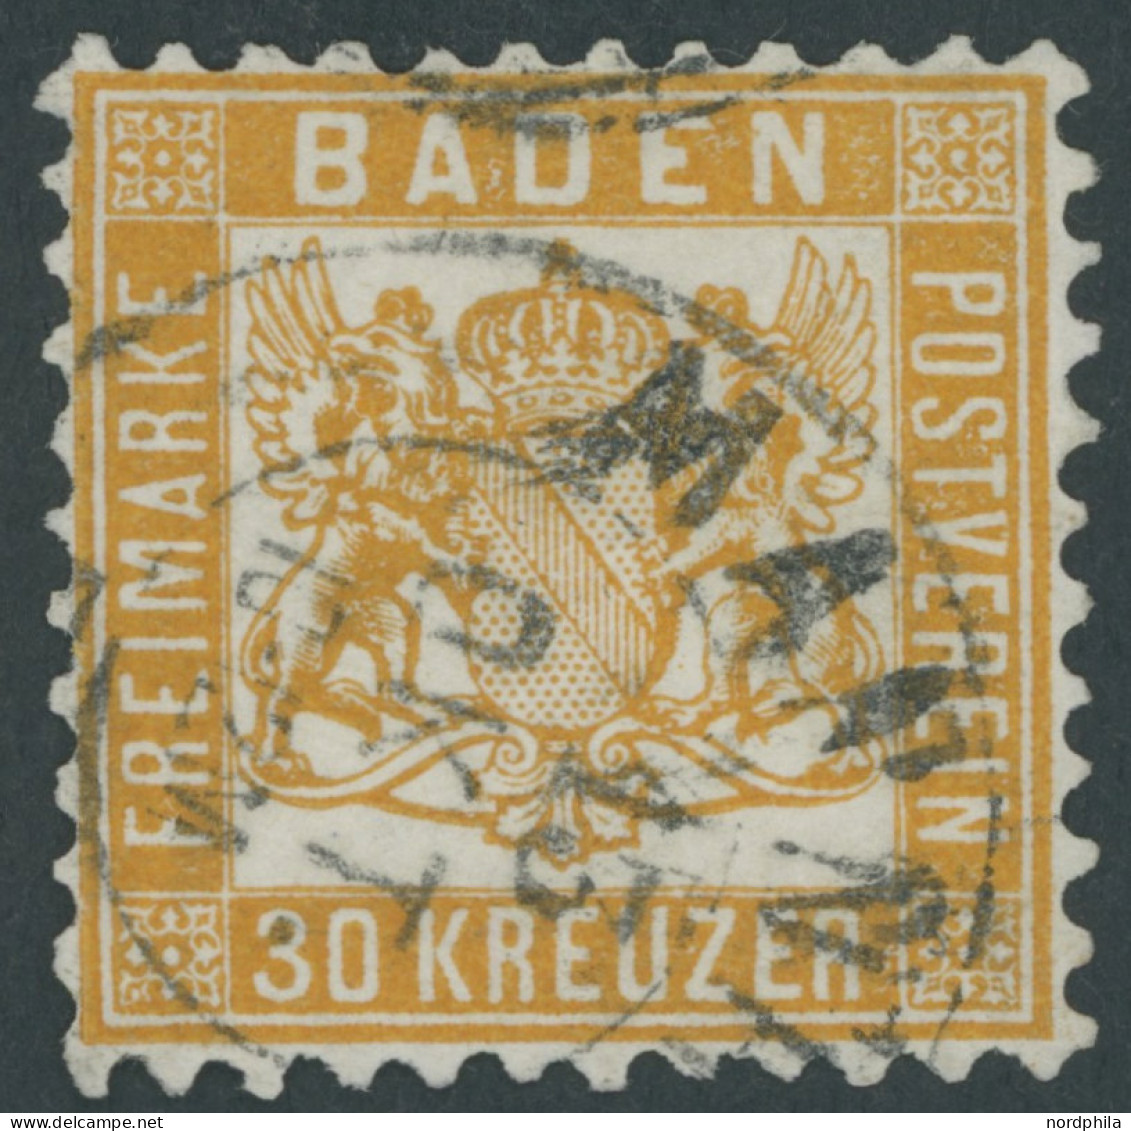 BADEN 22a O, 1862, 30 Kr. Lebhaftgelborange, Repariert Wie Pracht, Gepr. Brettl, Mi. (3200.-) - Used